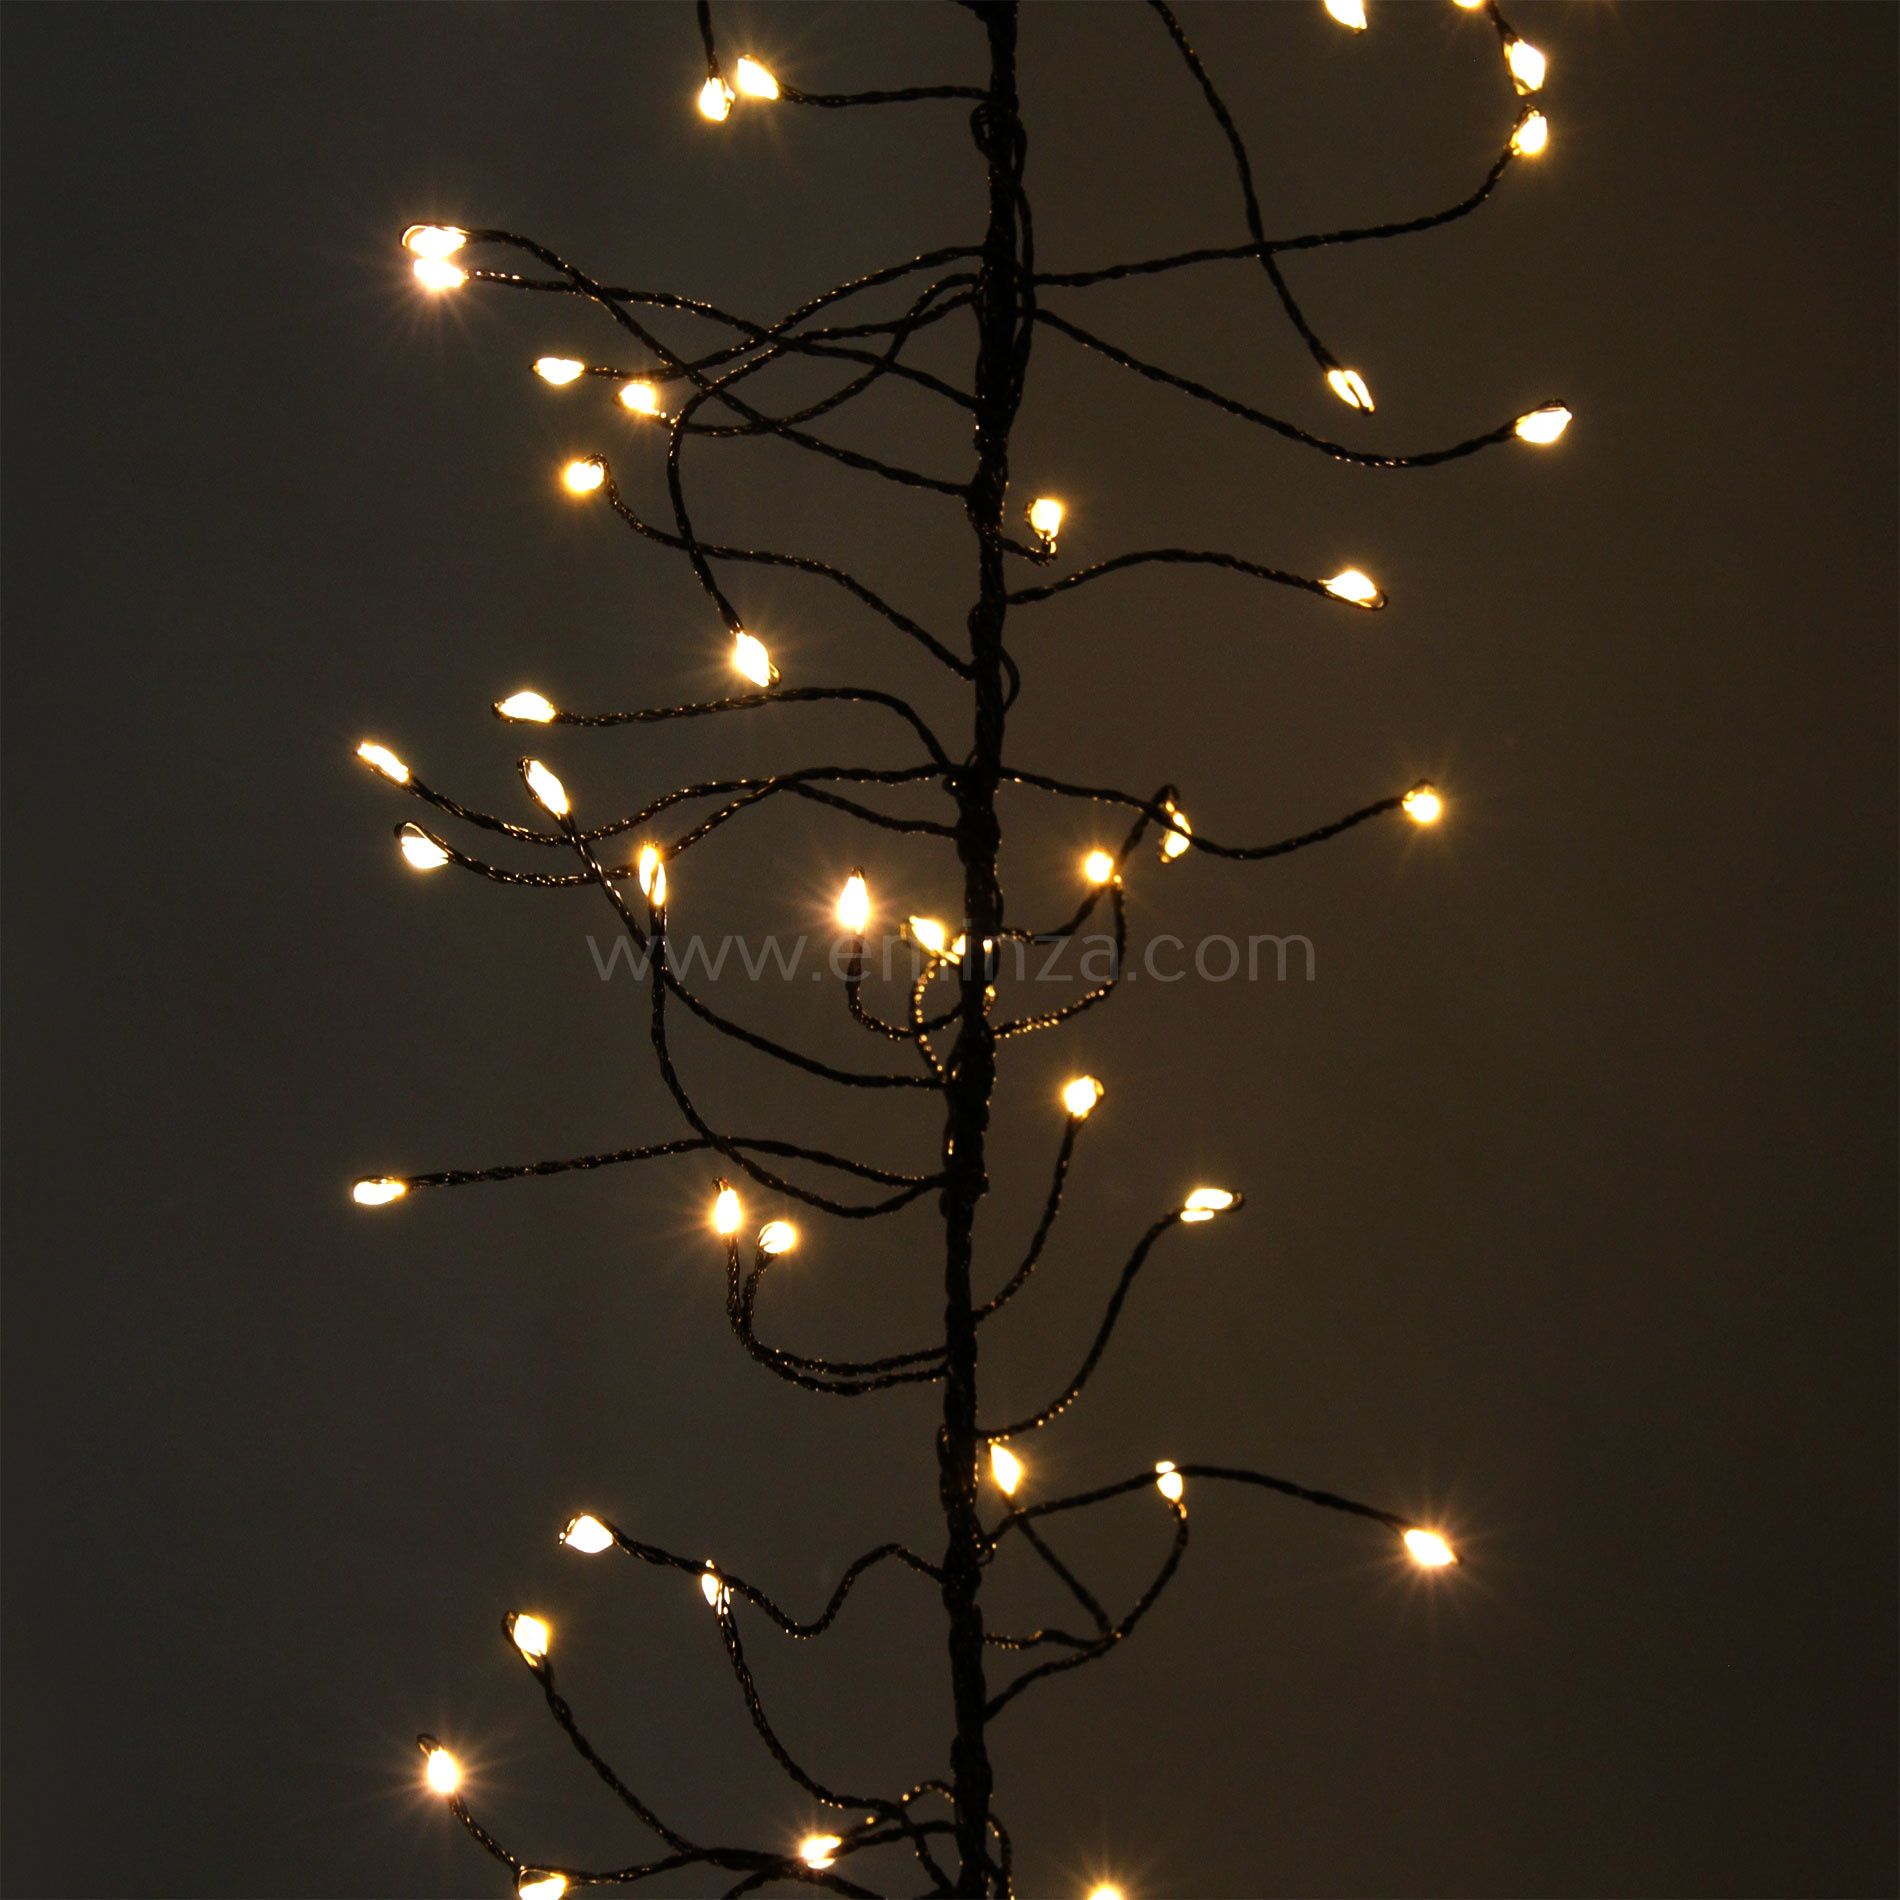 Guirlande lumineuse BOA blanche chaud LED extérieure